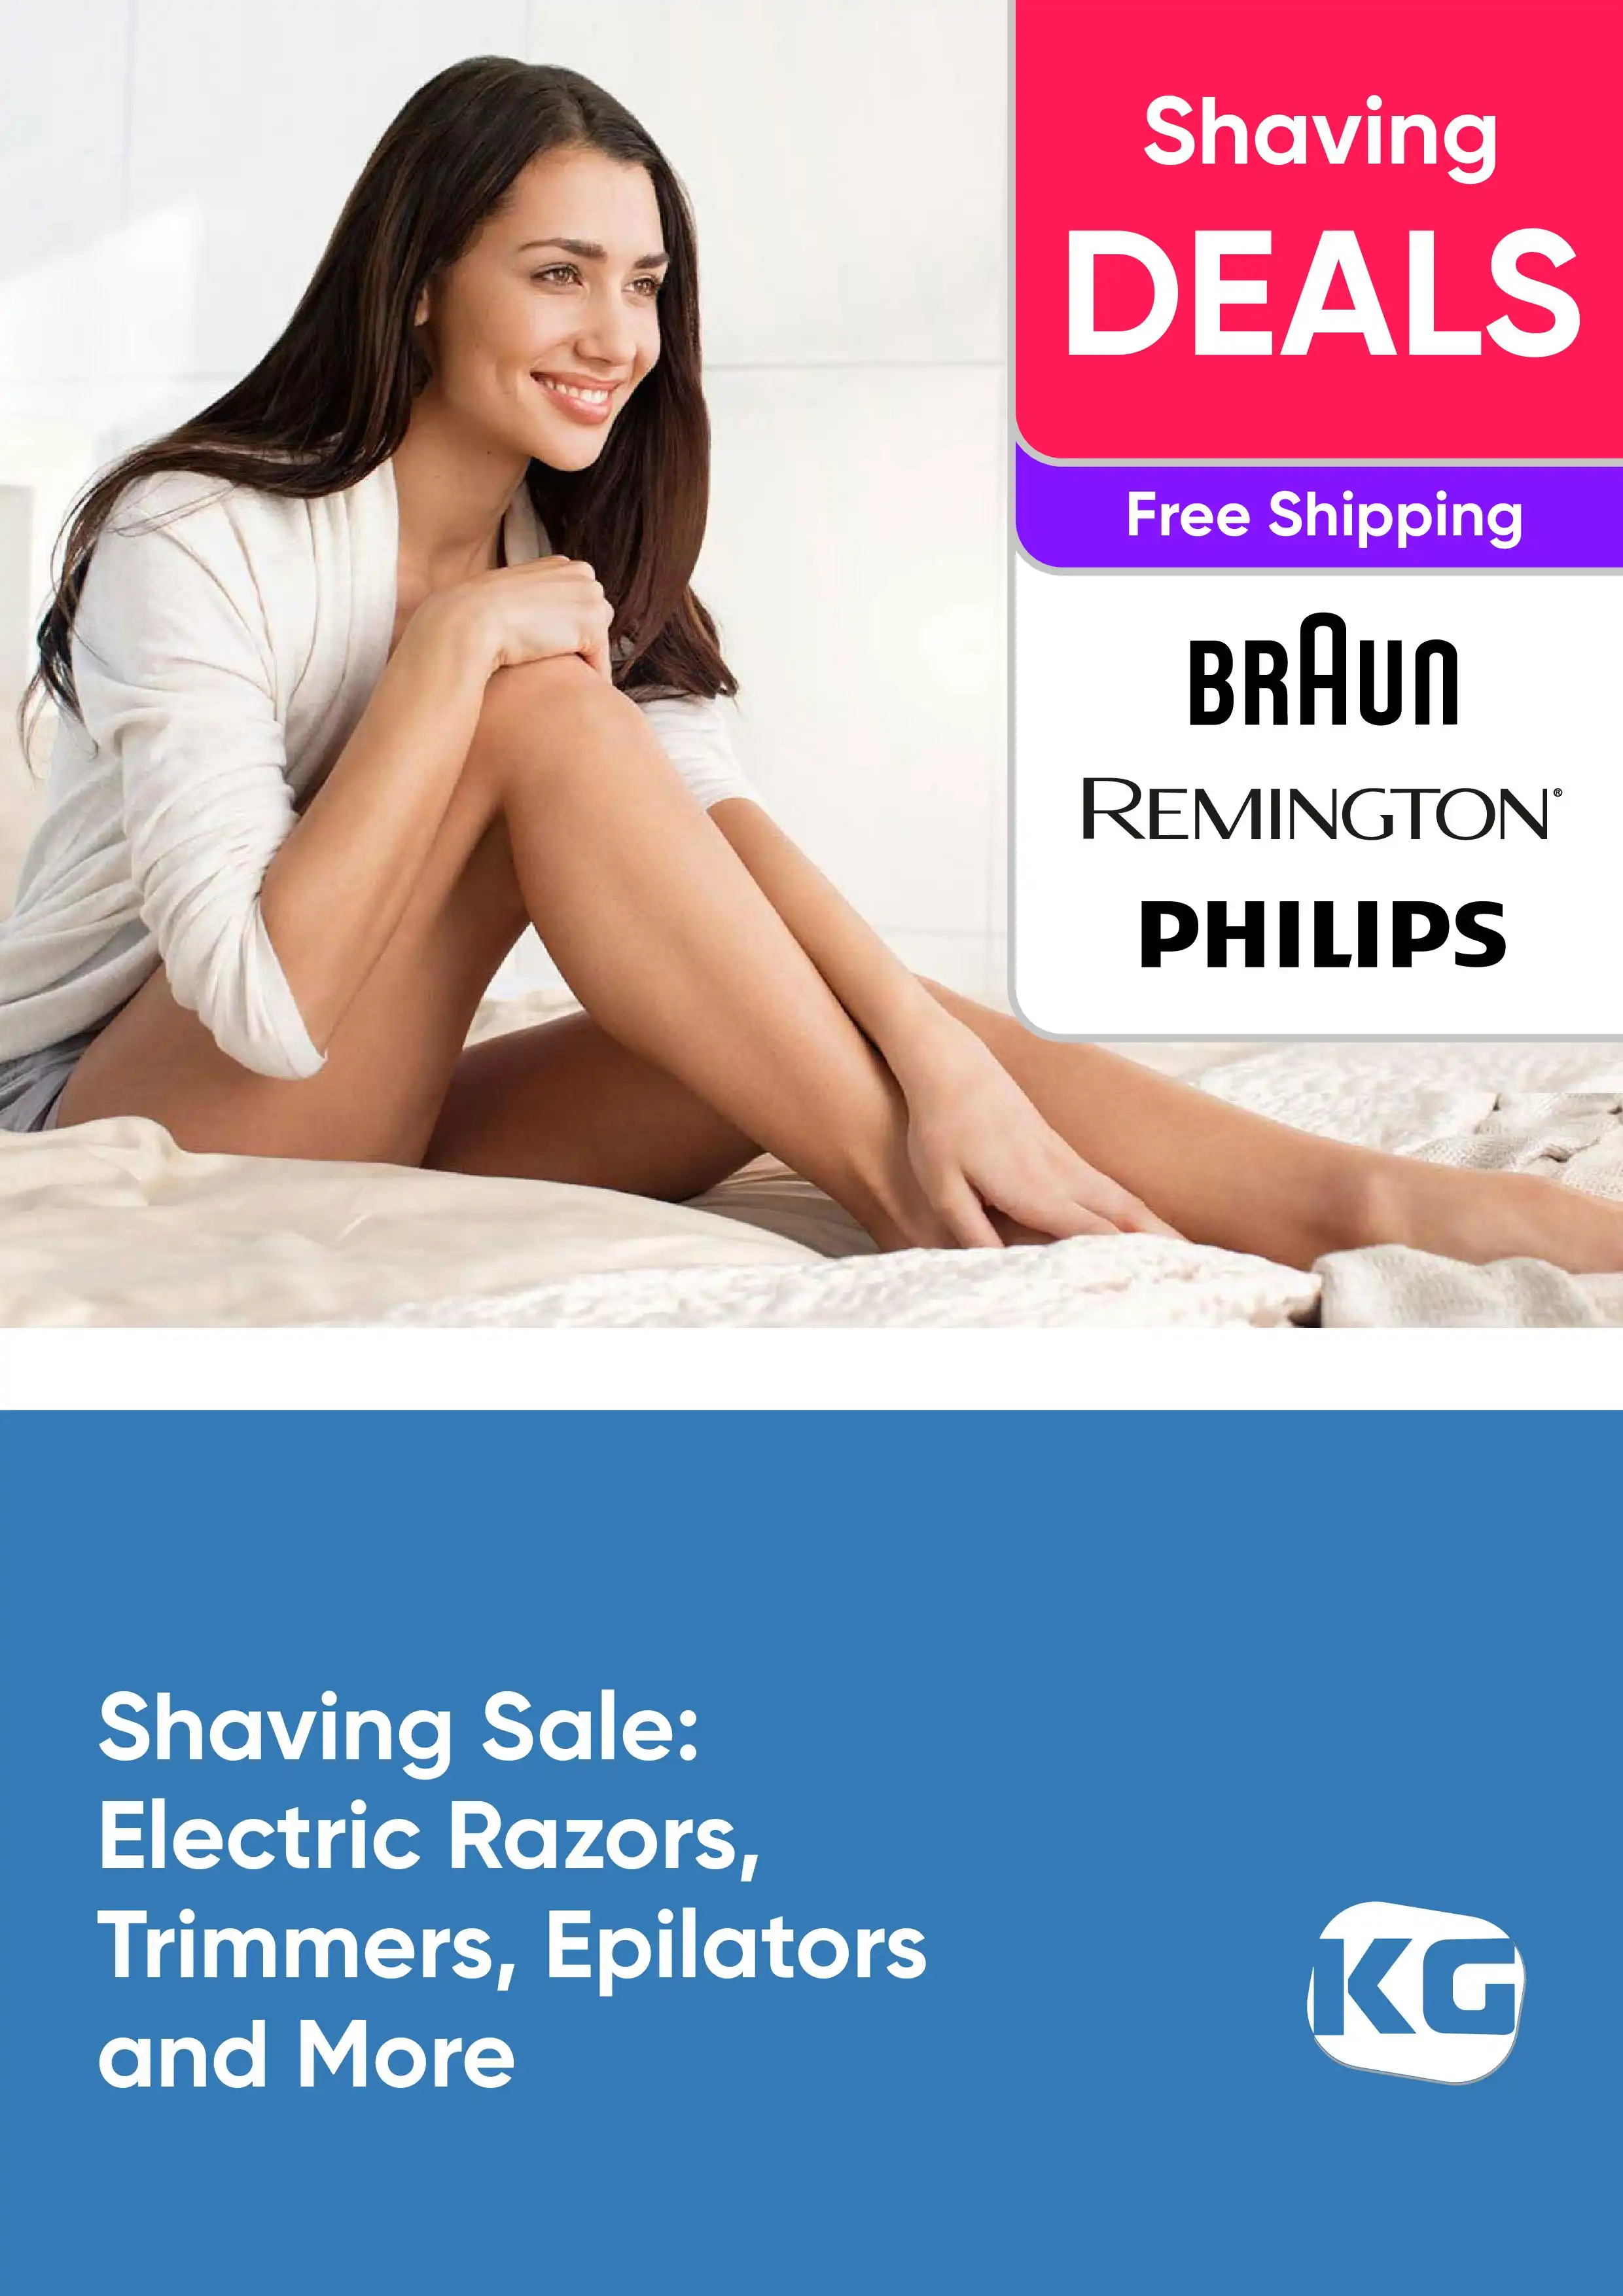 Shaving Sale - Electric Razors, Trimmers, Epilators and More - Braun, Remington, Philips